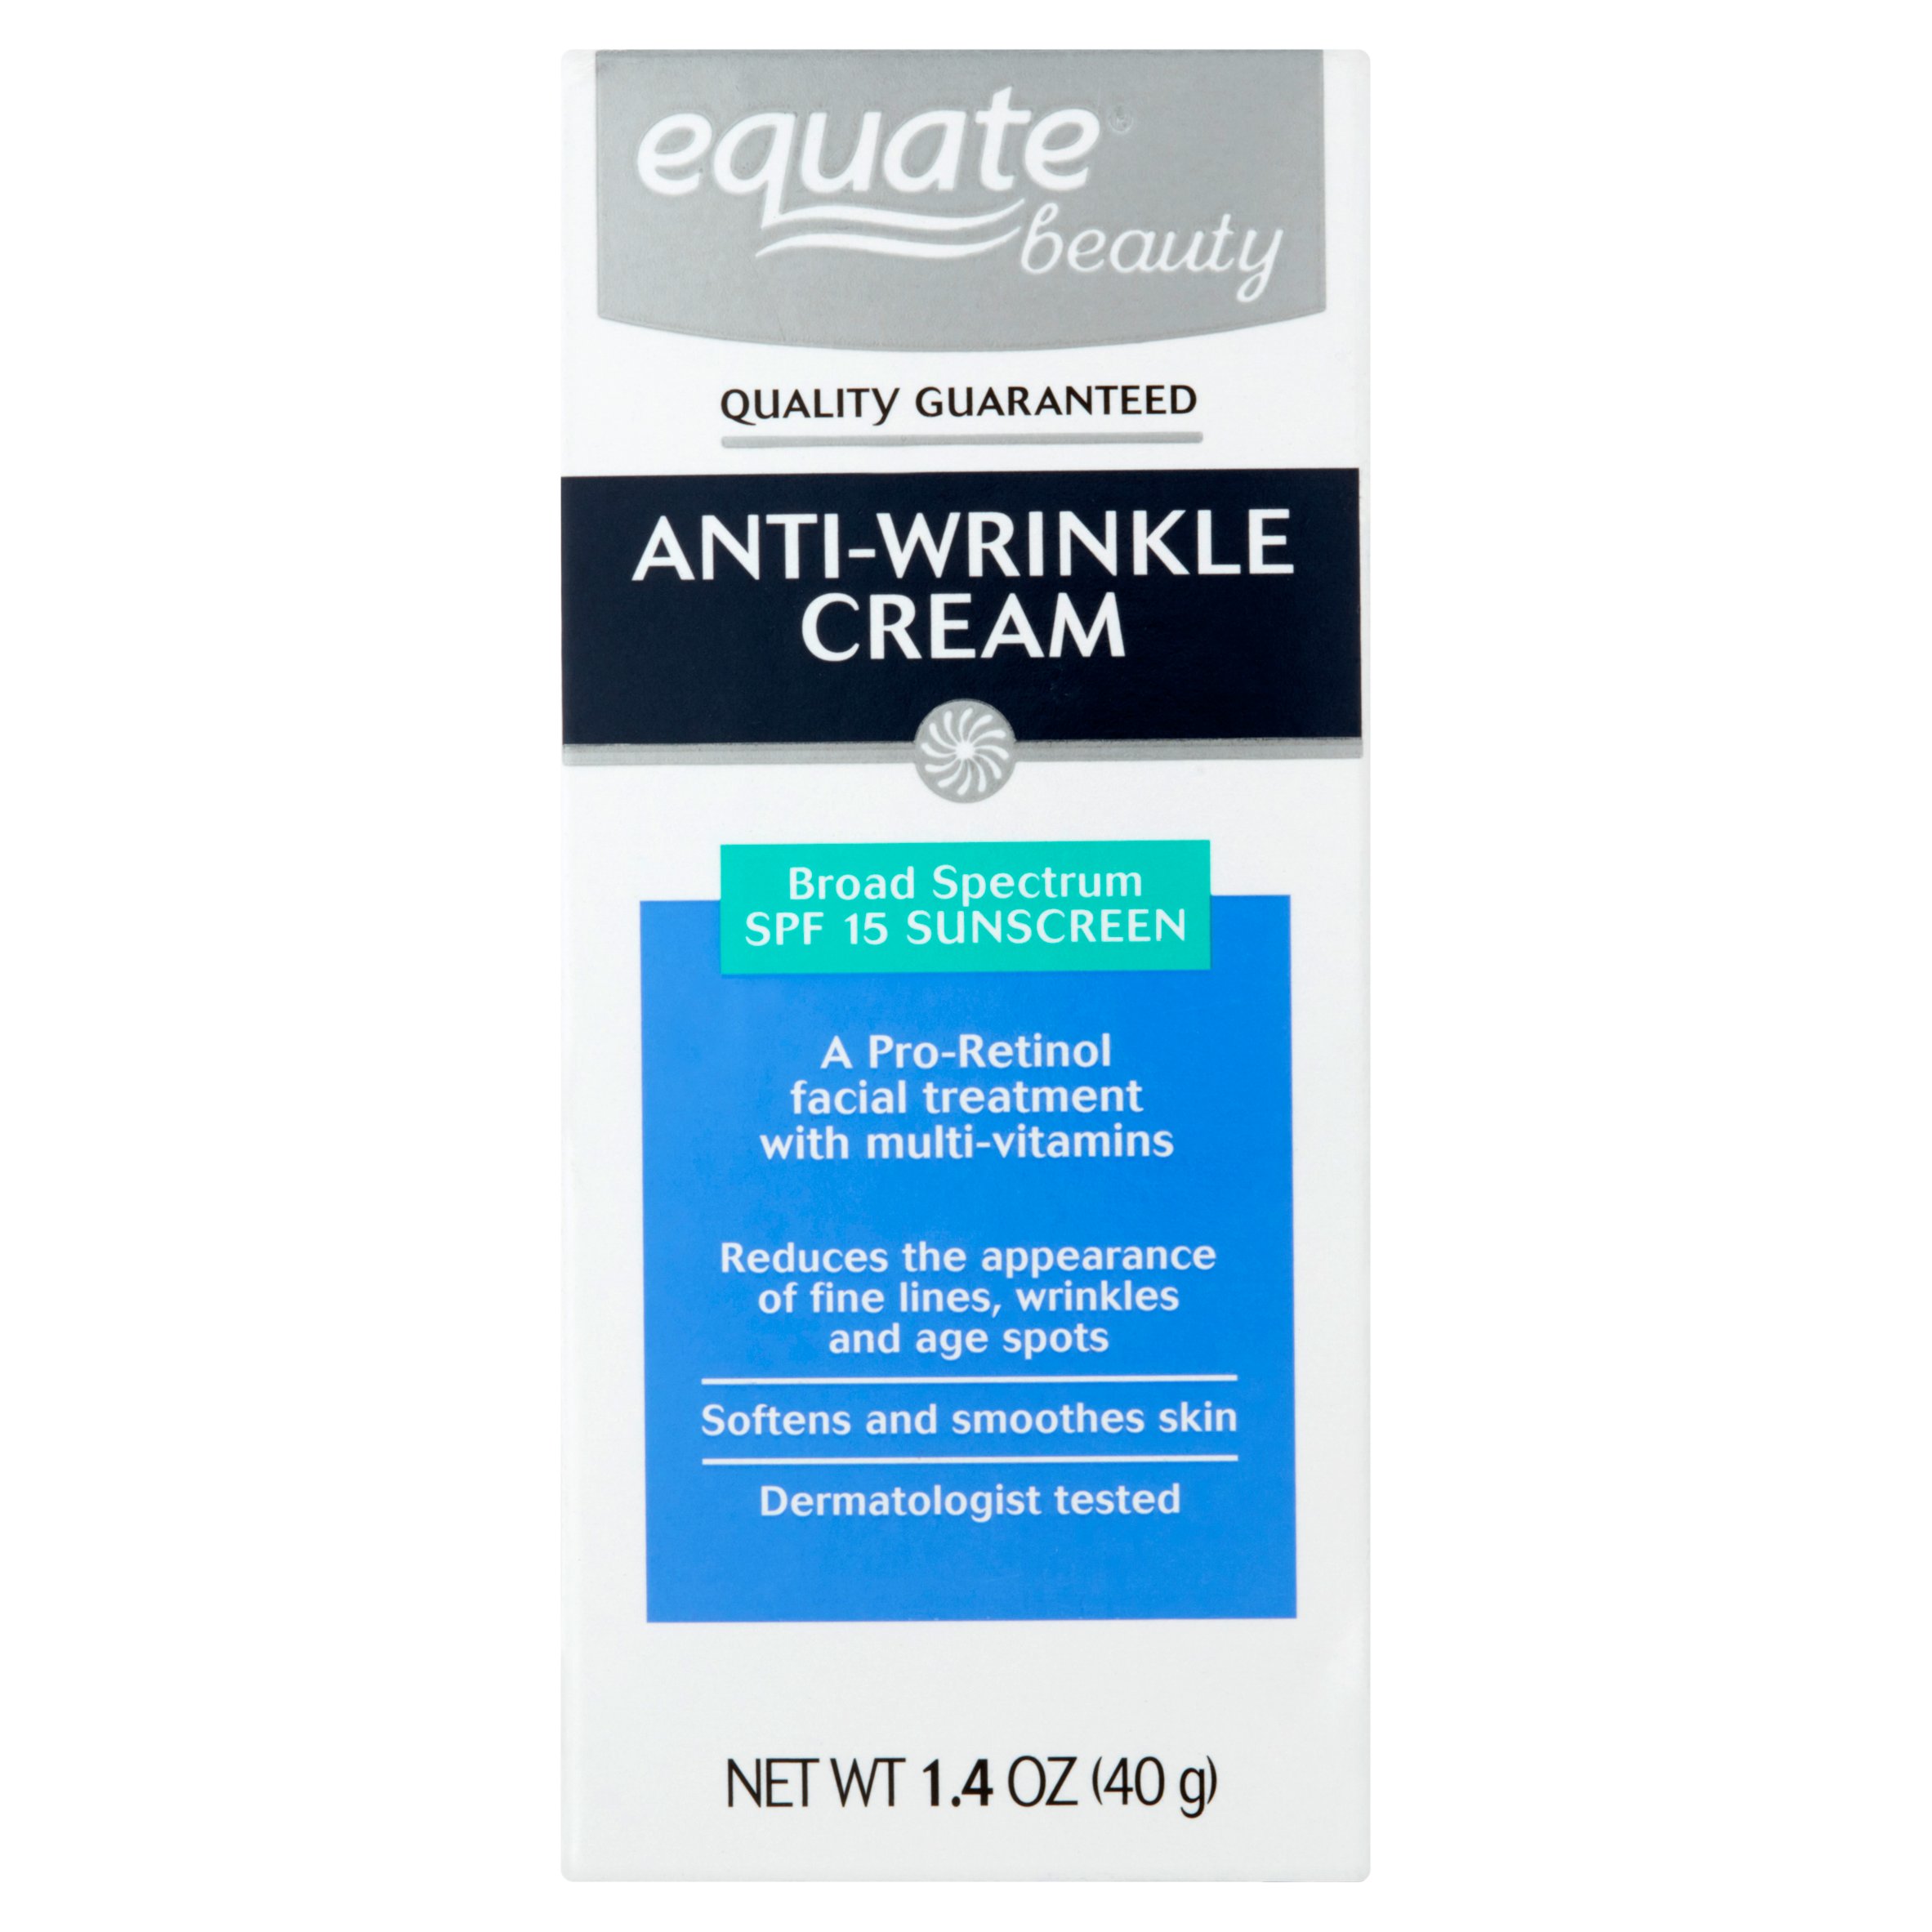 Equate Anti-Wrinkle Cream, SPF 15, 1.4 Oz. - image 1 of 5